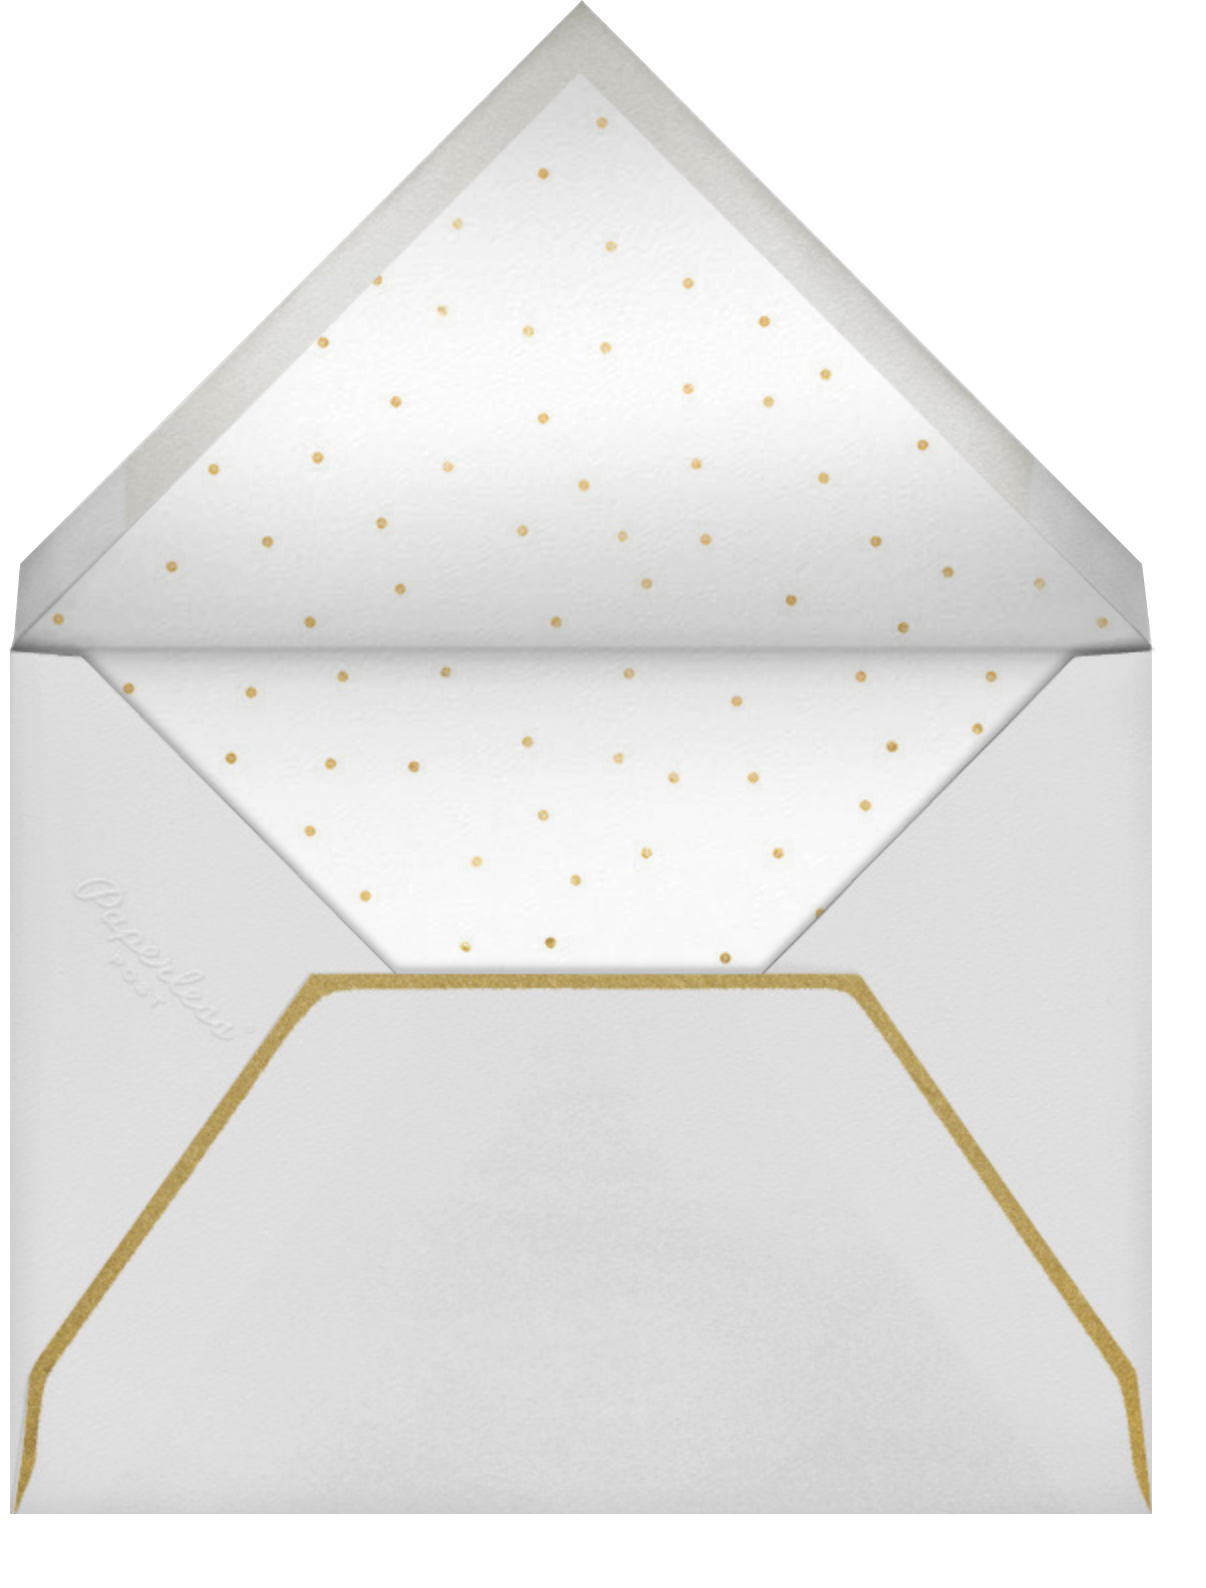 Freehand Filigree - Lunar New Year - Paperless Post - Envelope